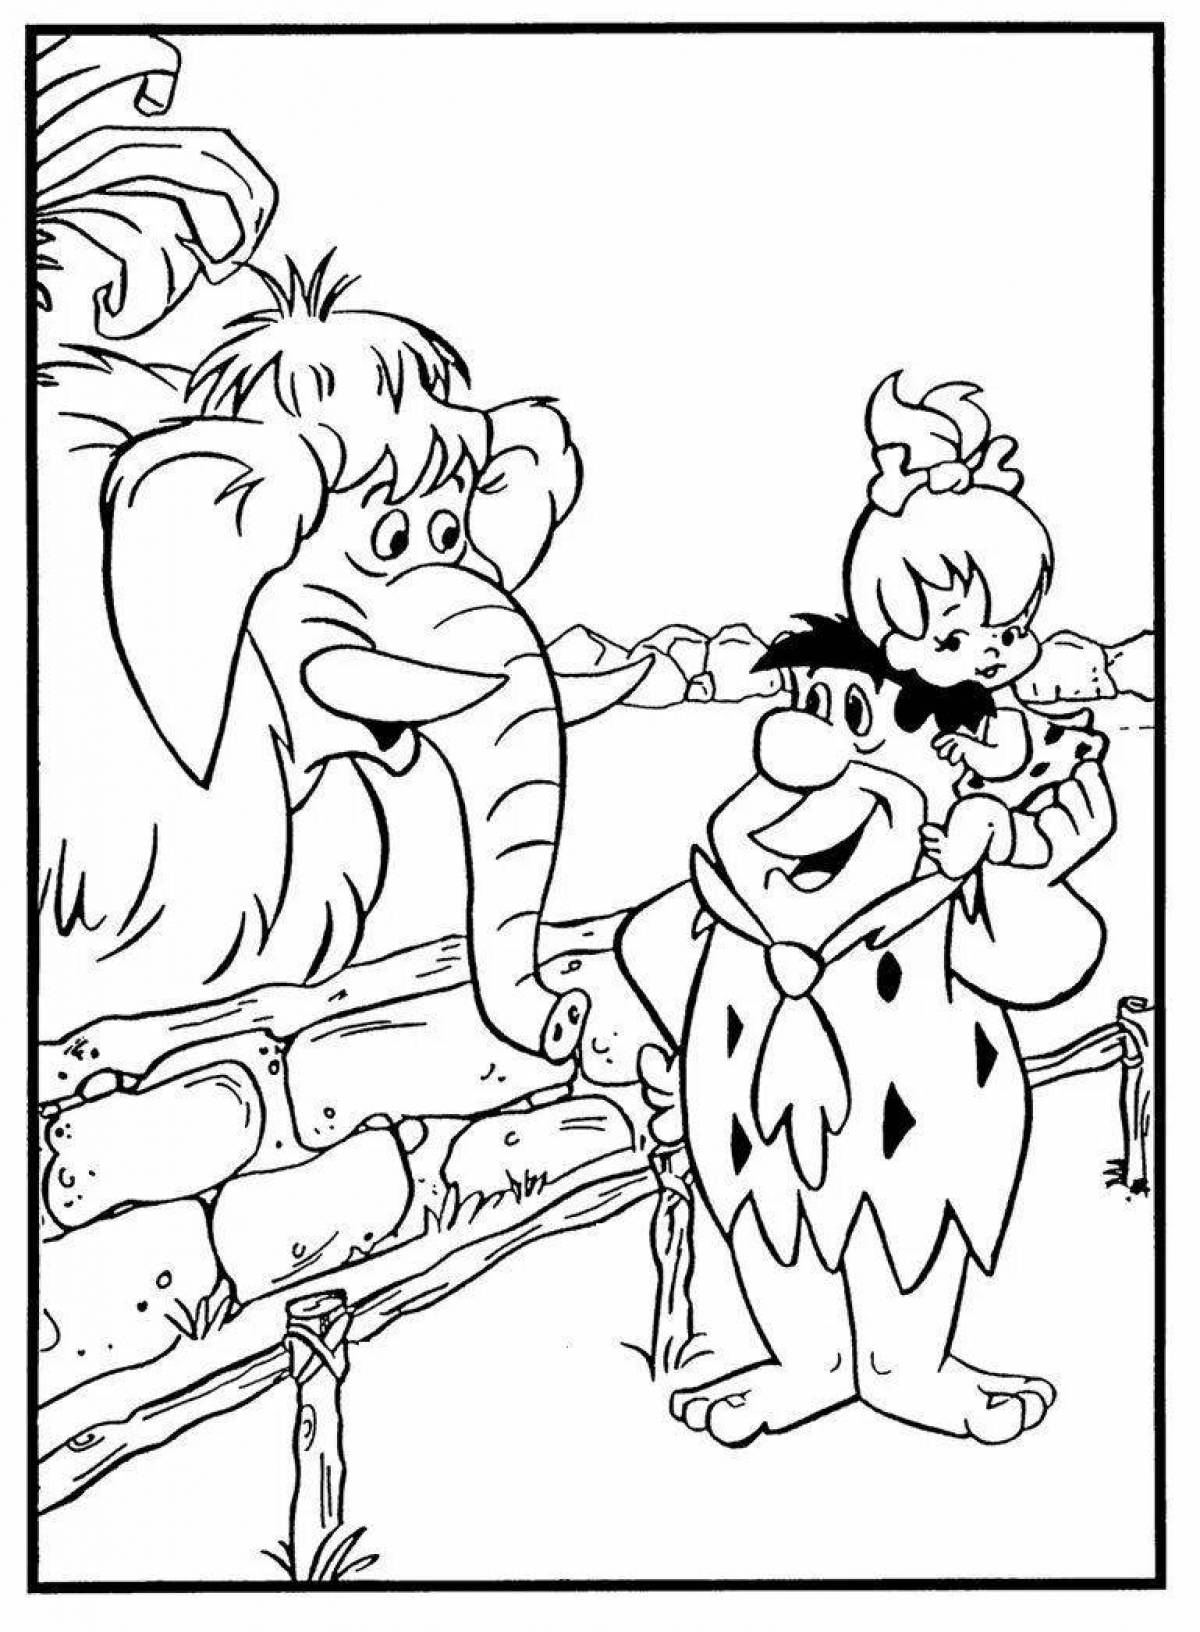 Fred flintstone fairy tale coloring page